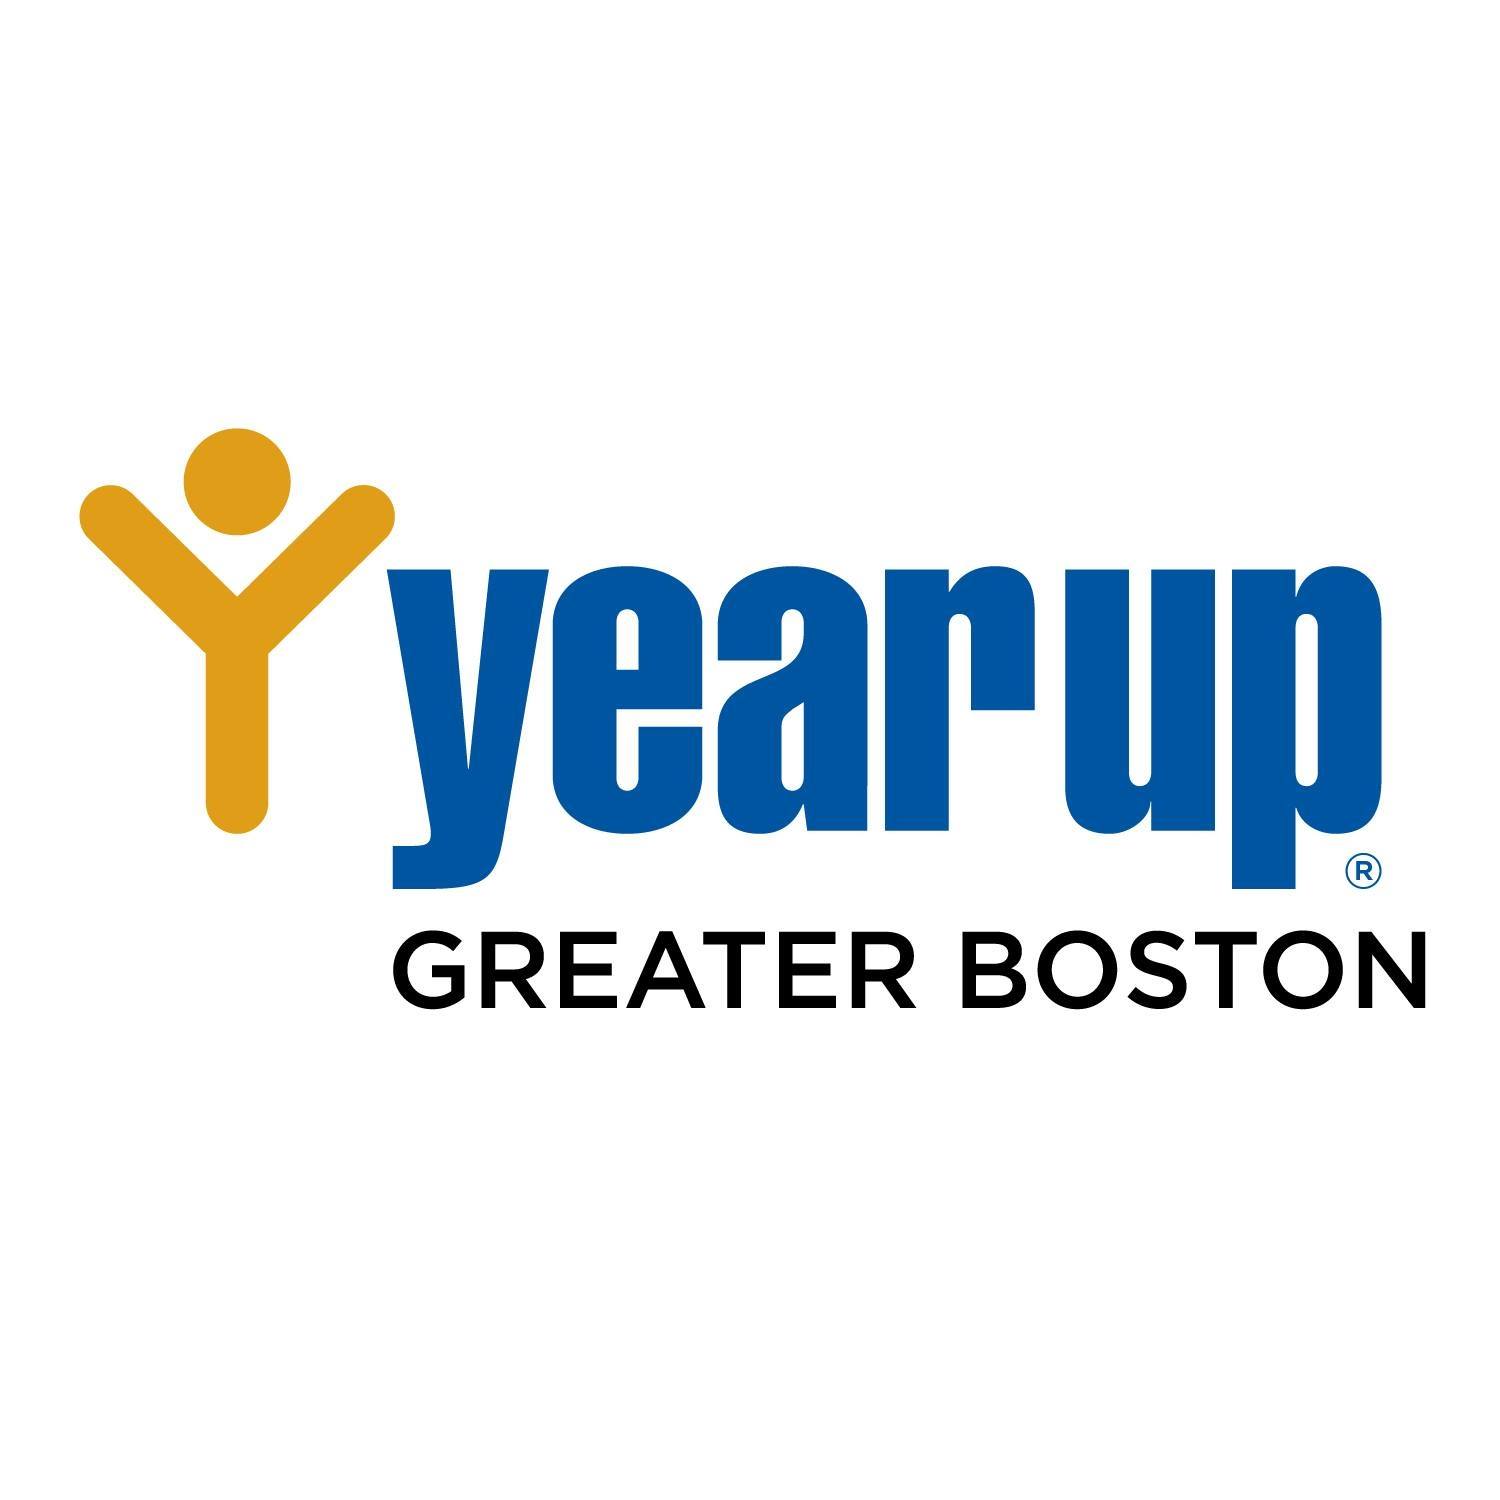 year_up_gb.jpg logo